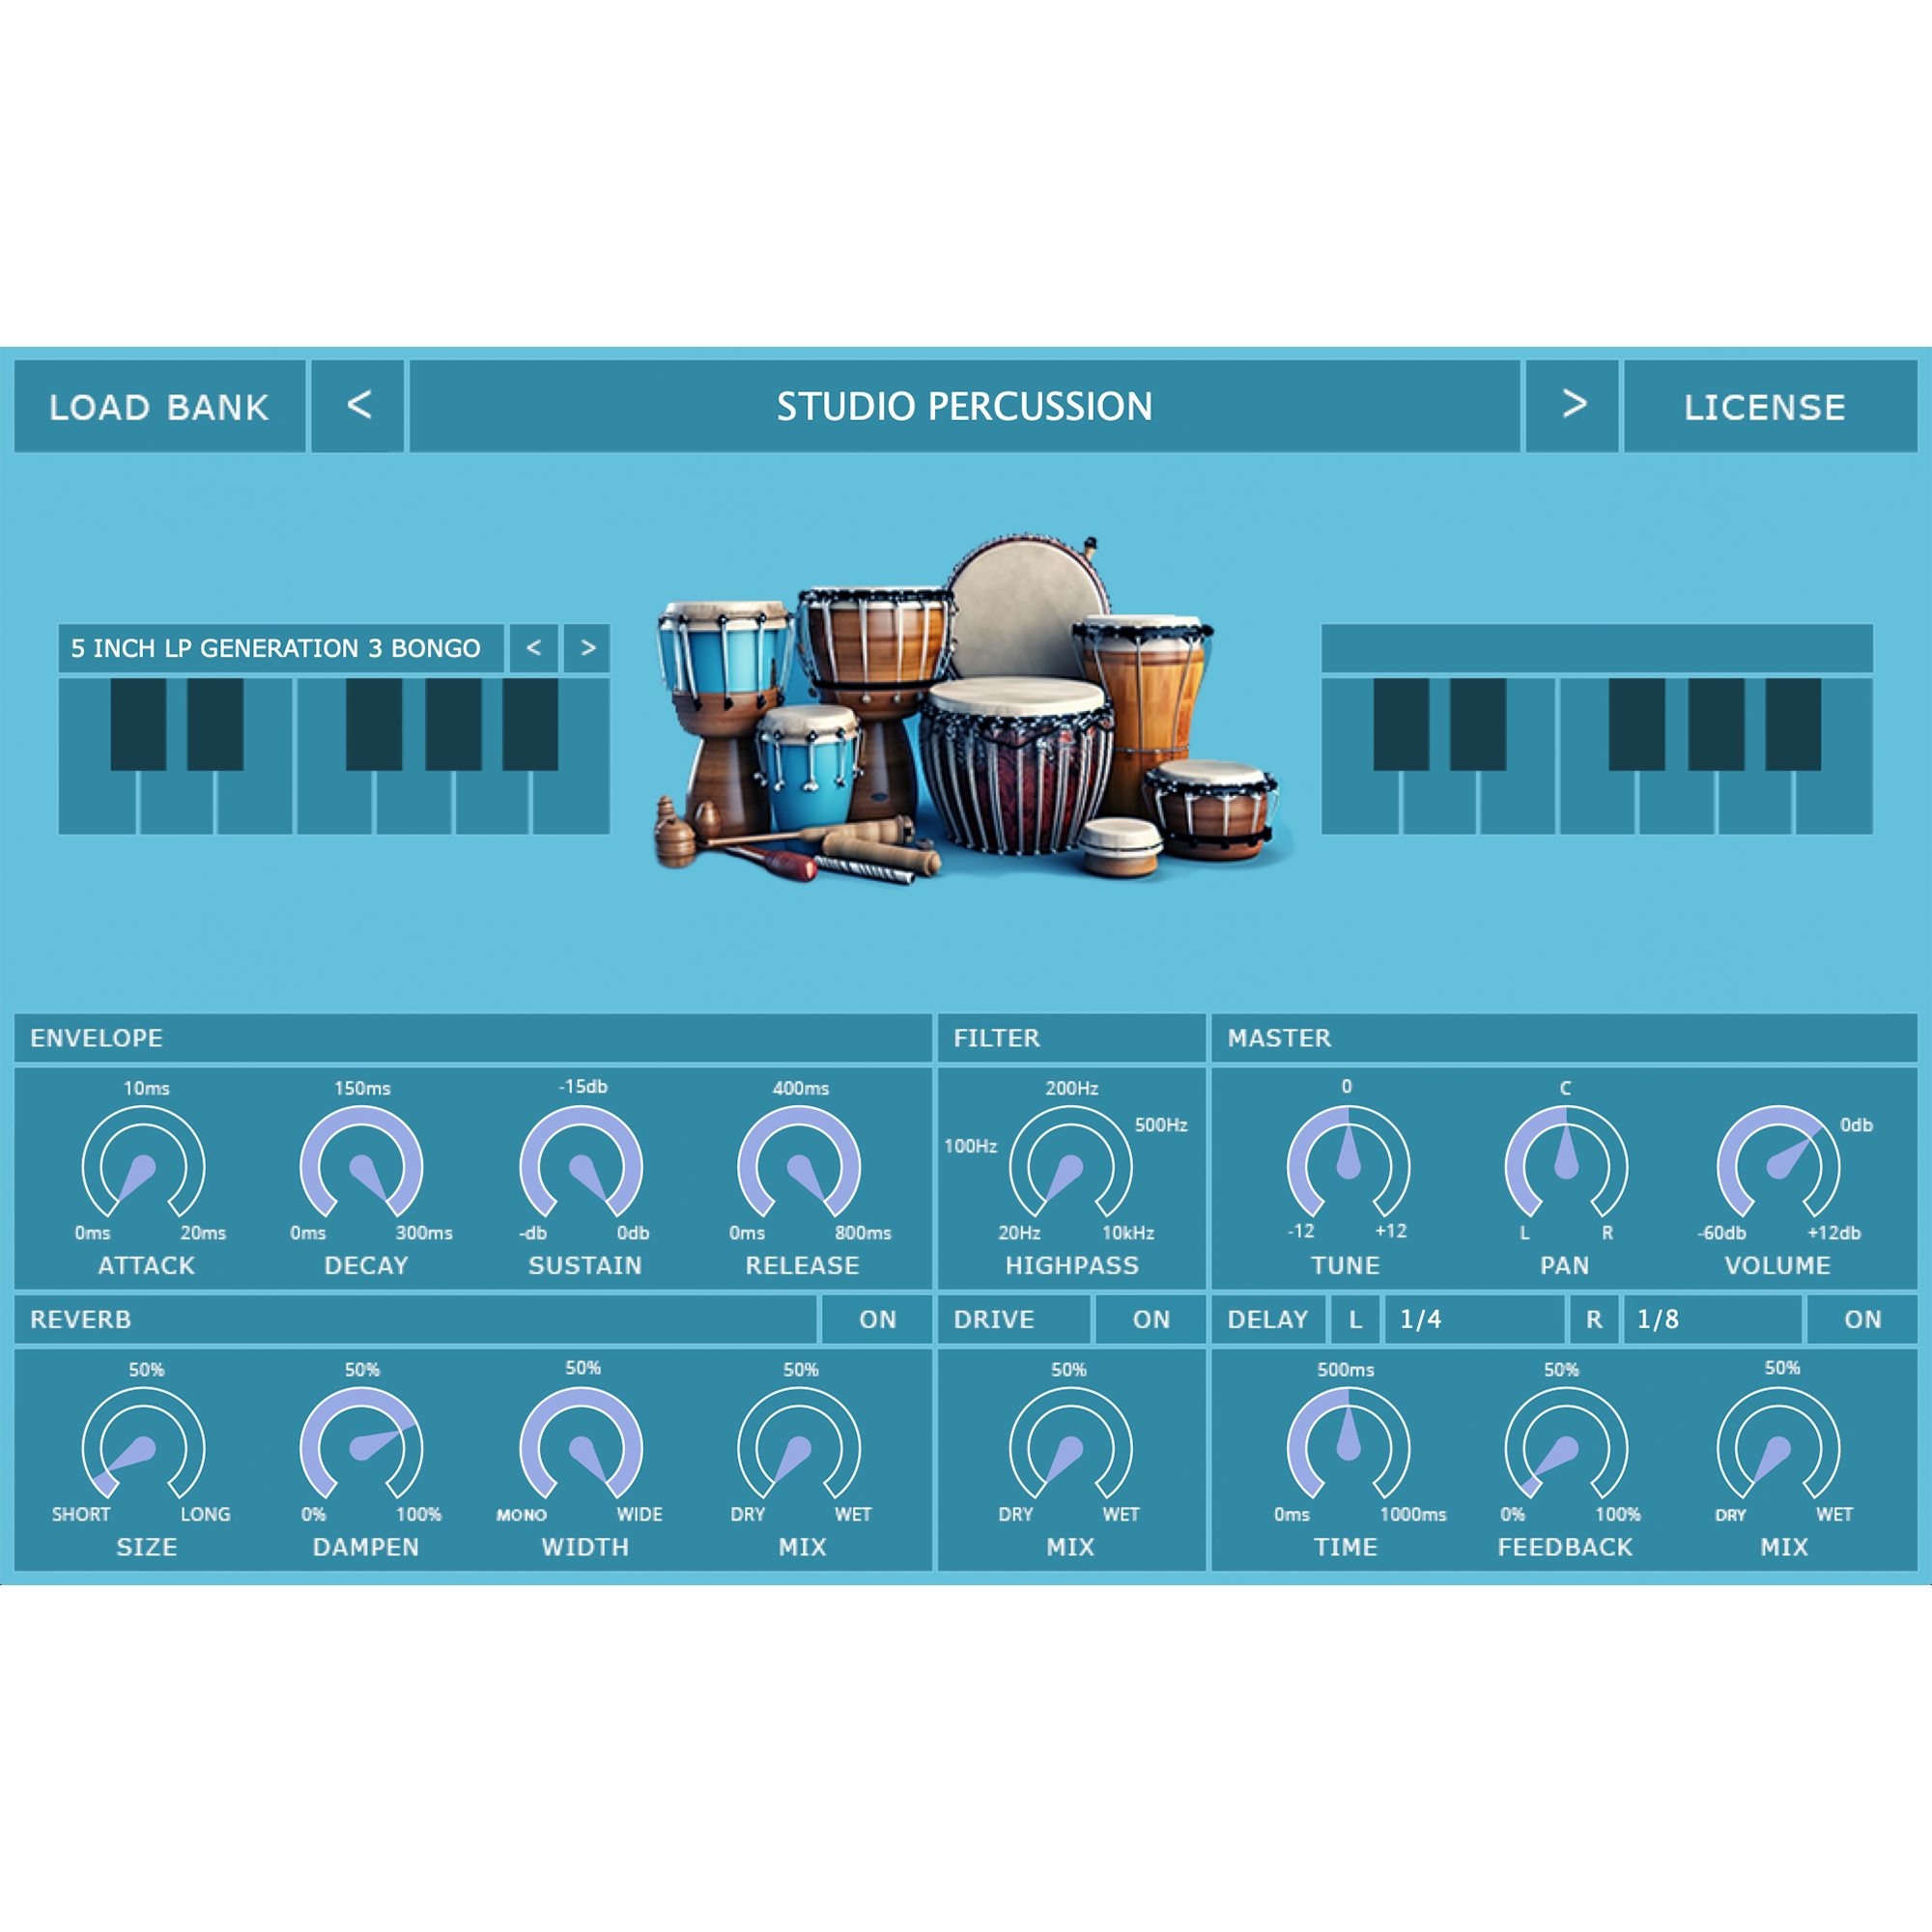 Studio-Percussion-Product-Image-1